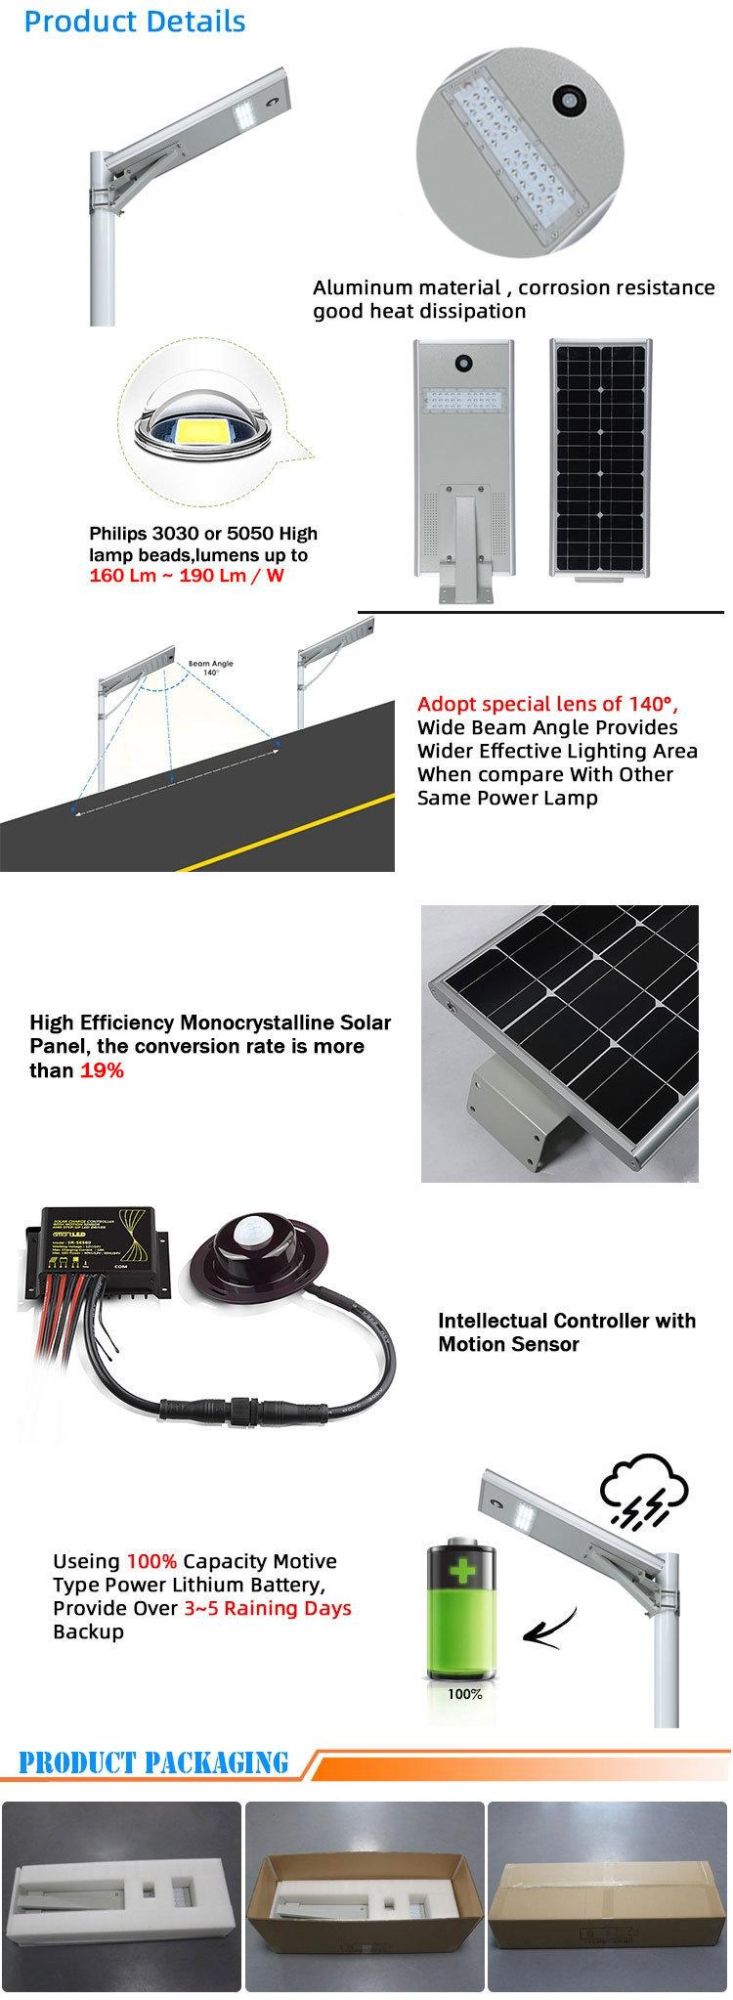 Waterproof Outdoor IP65 Integrated 15W LED Solar Street Light Price